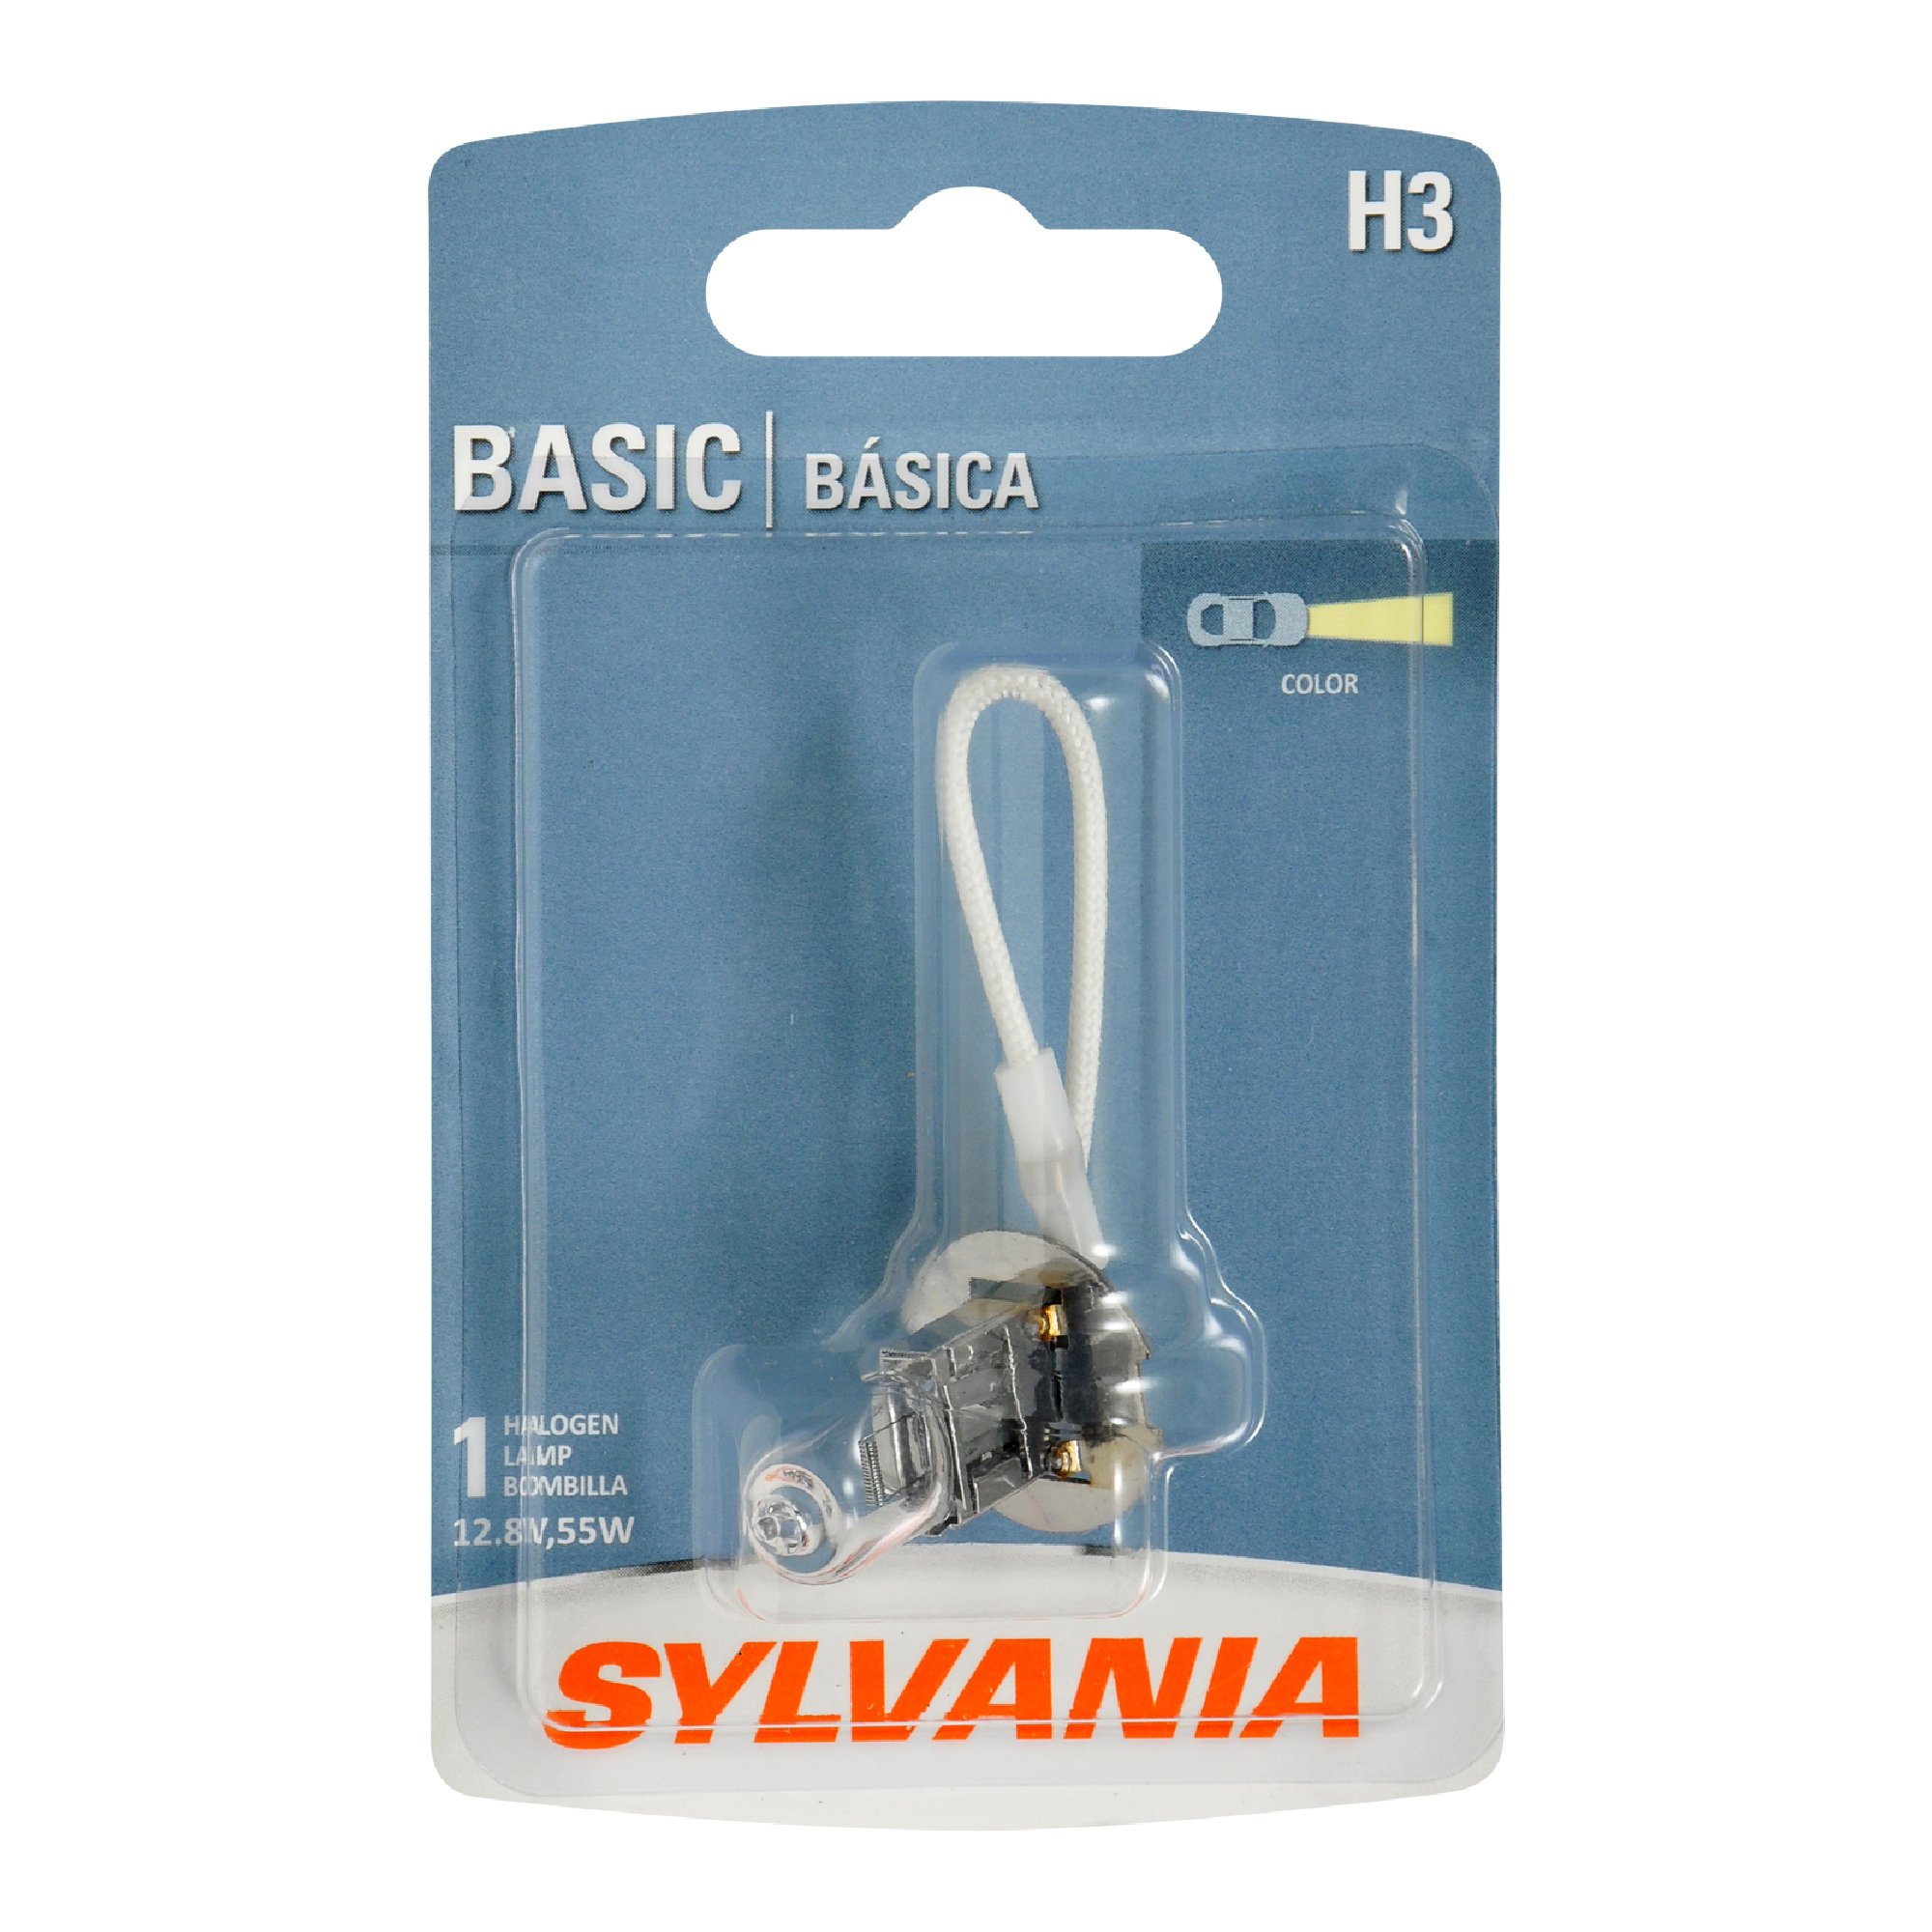 SYLVANIA H3 Basic Fog Bulb, Pack